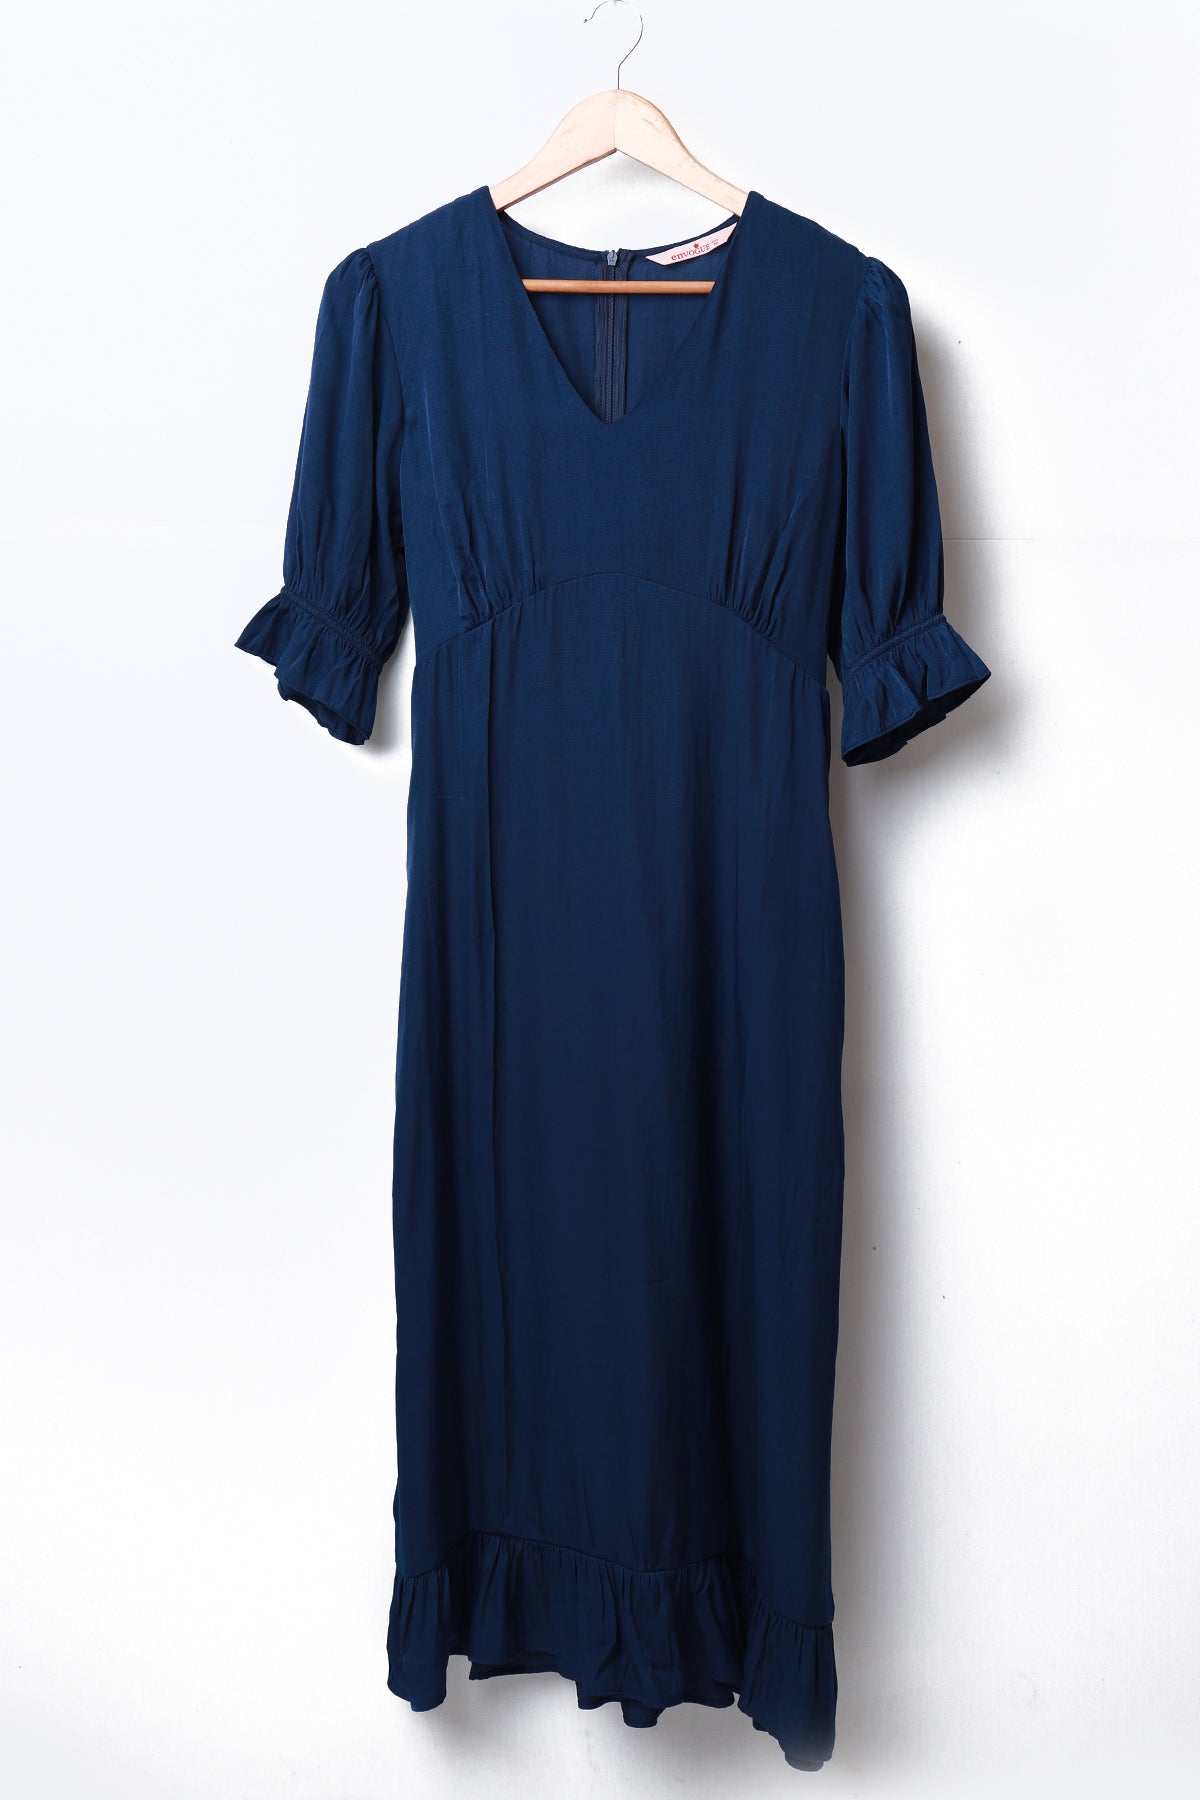 Envogue Women's Midi Plain Casual Dress